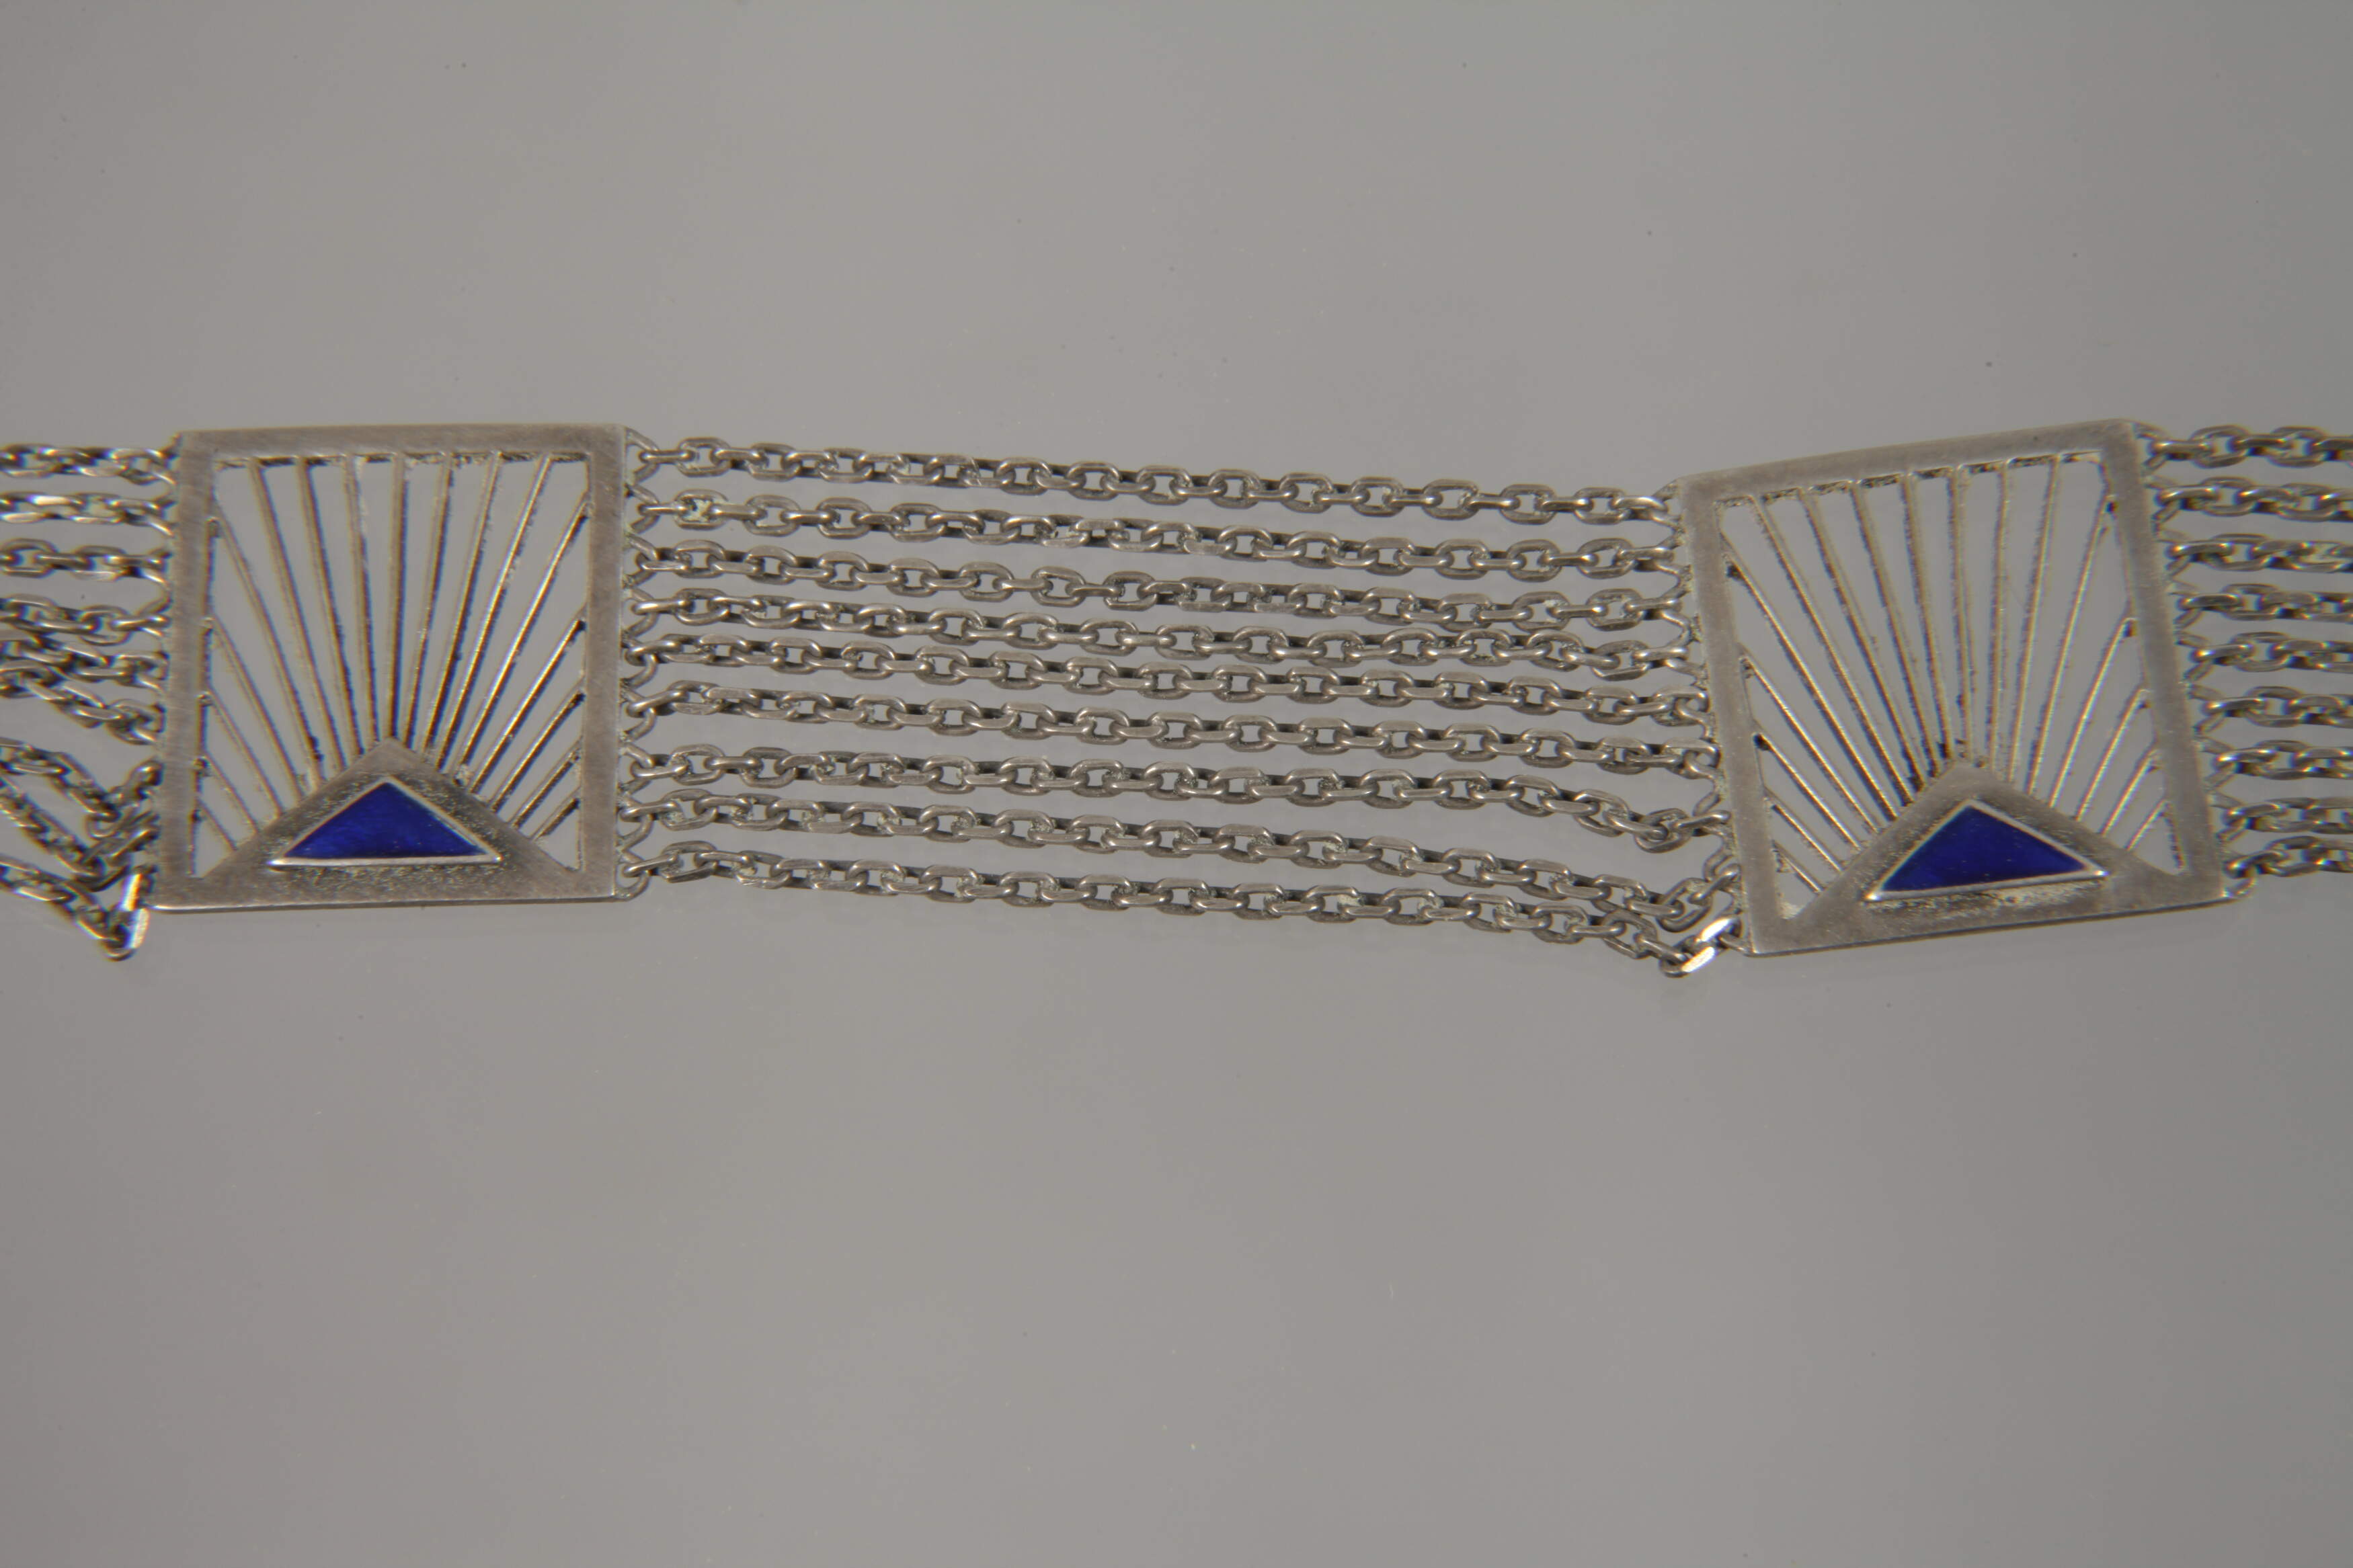 Theodor Fahrner necklace - Image 2 of 3